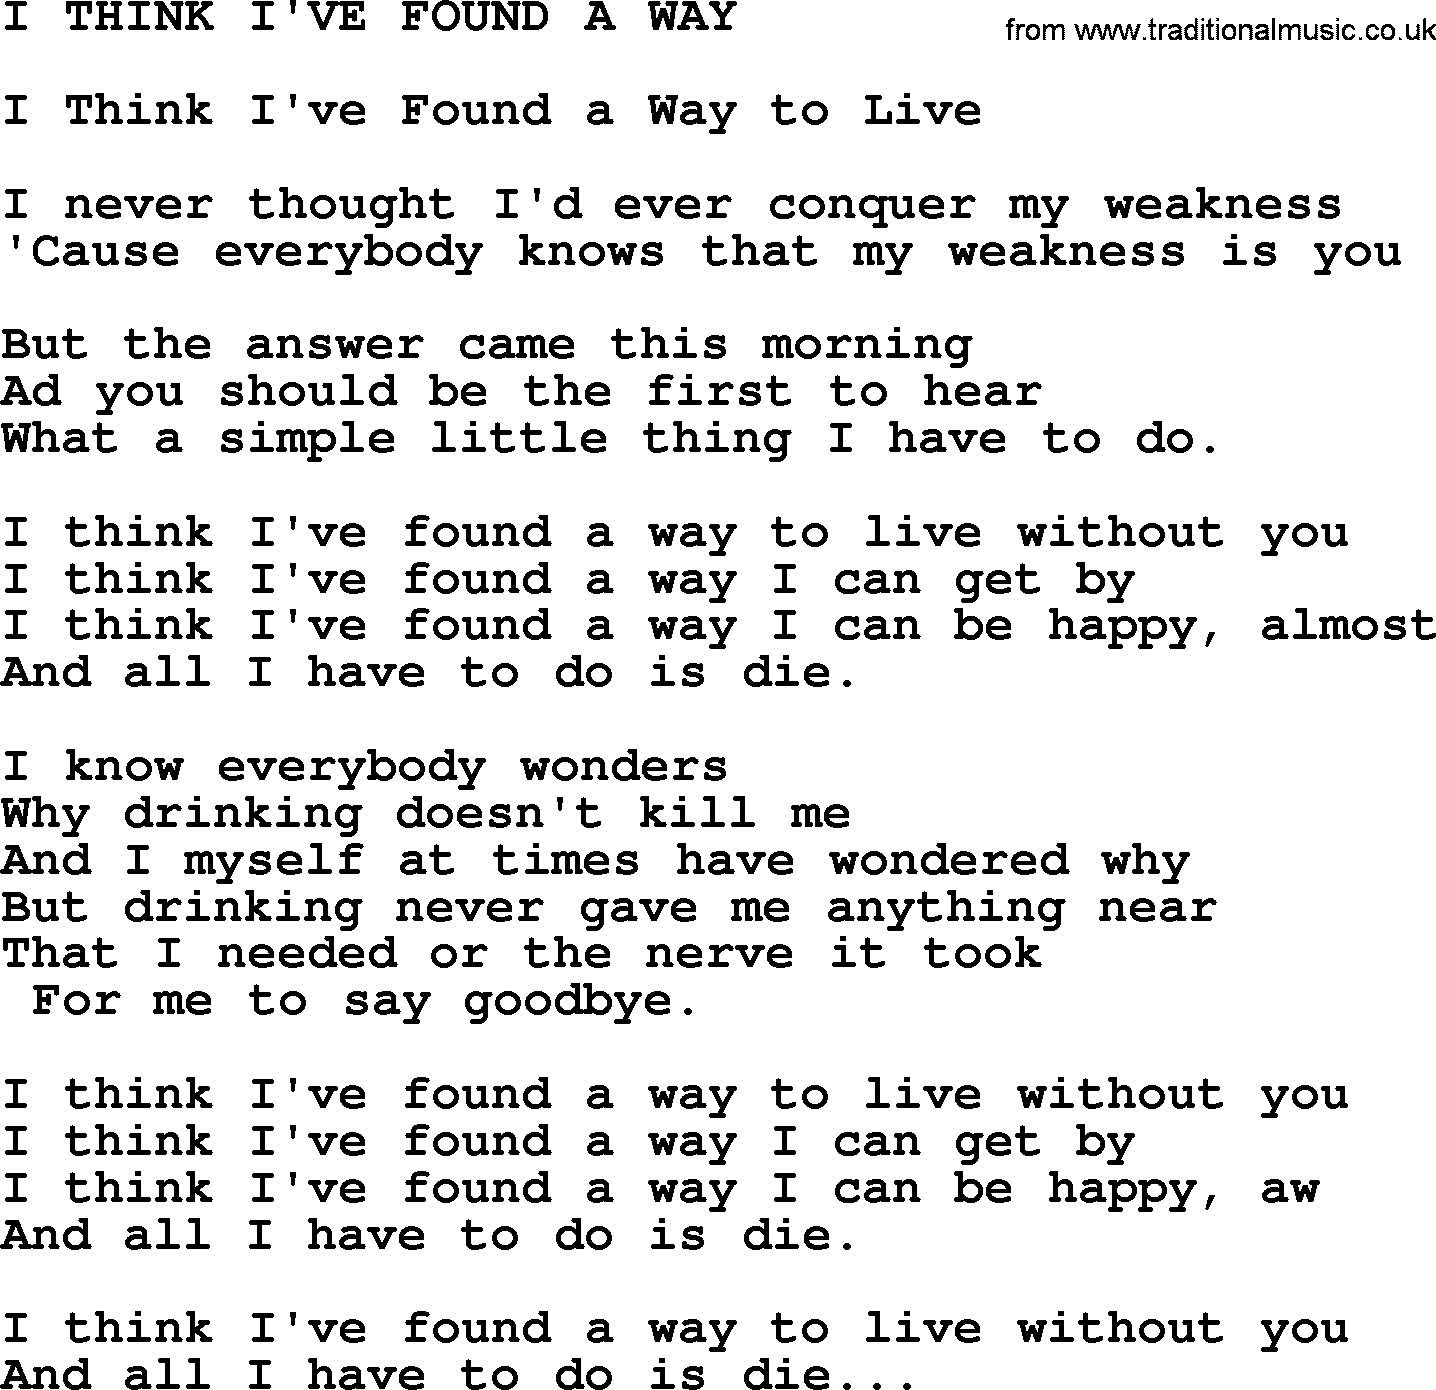 Merle Haggard song: I Think I've Found A Way, lyrics.